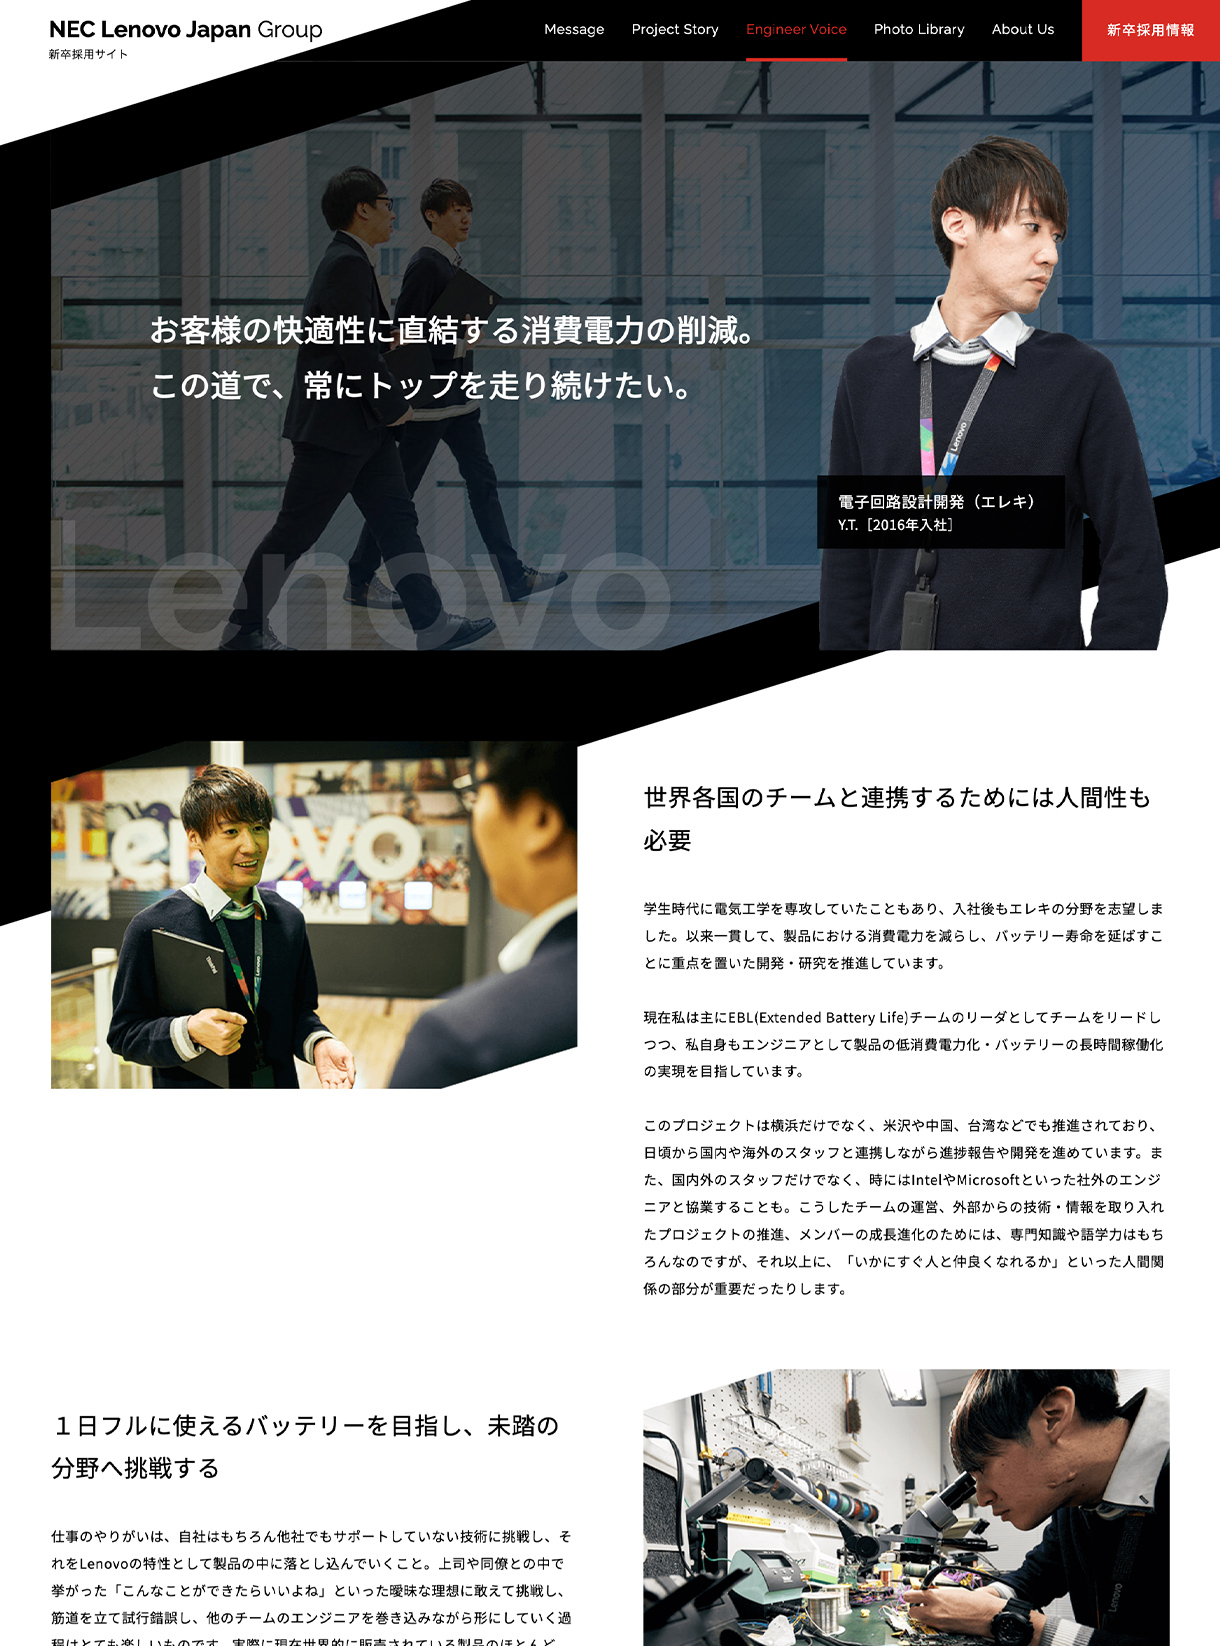 NECレノボ・ジャパングループ採用サイトの画像